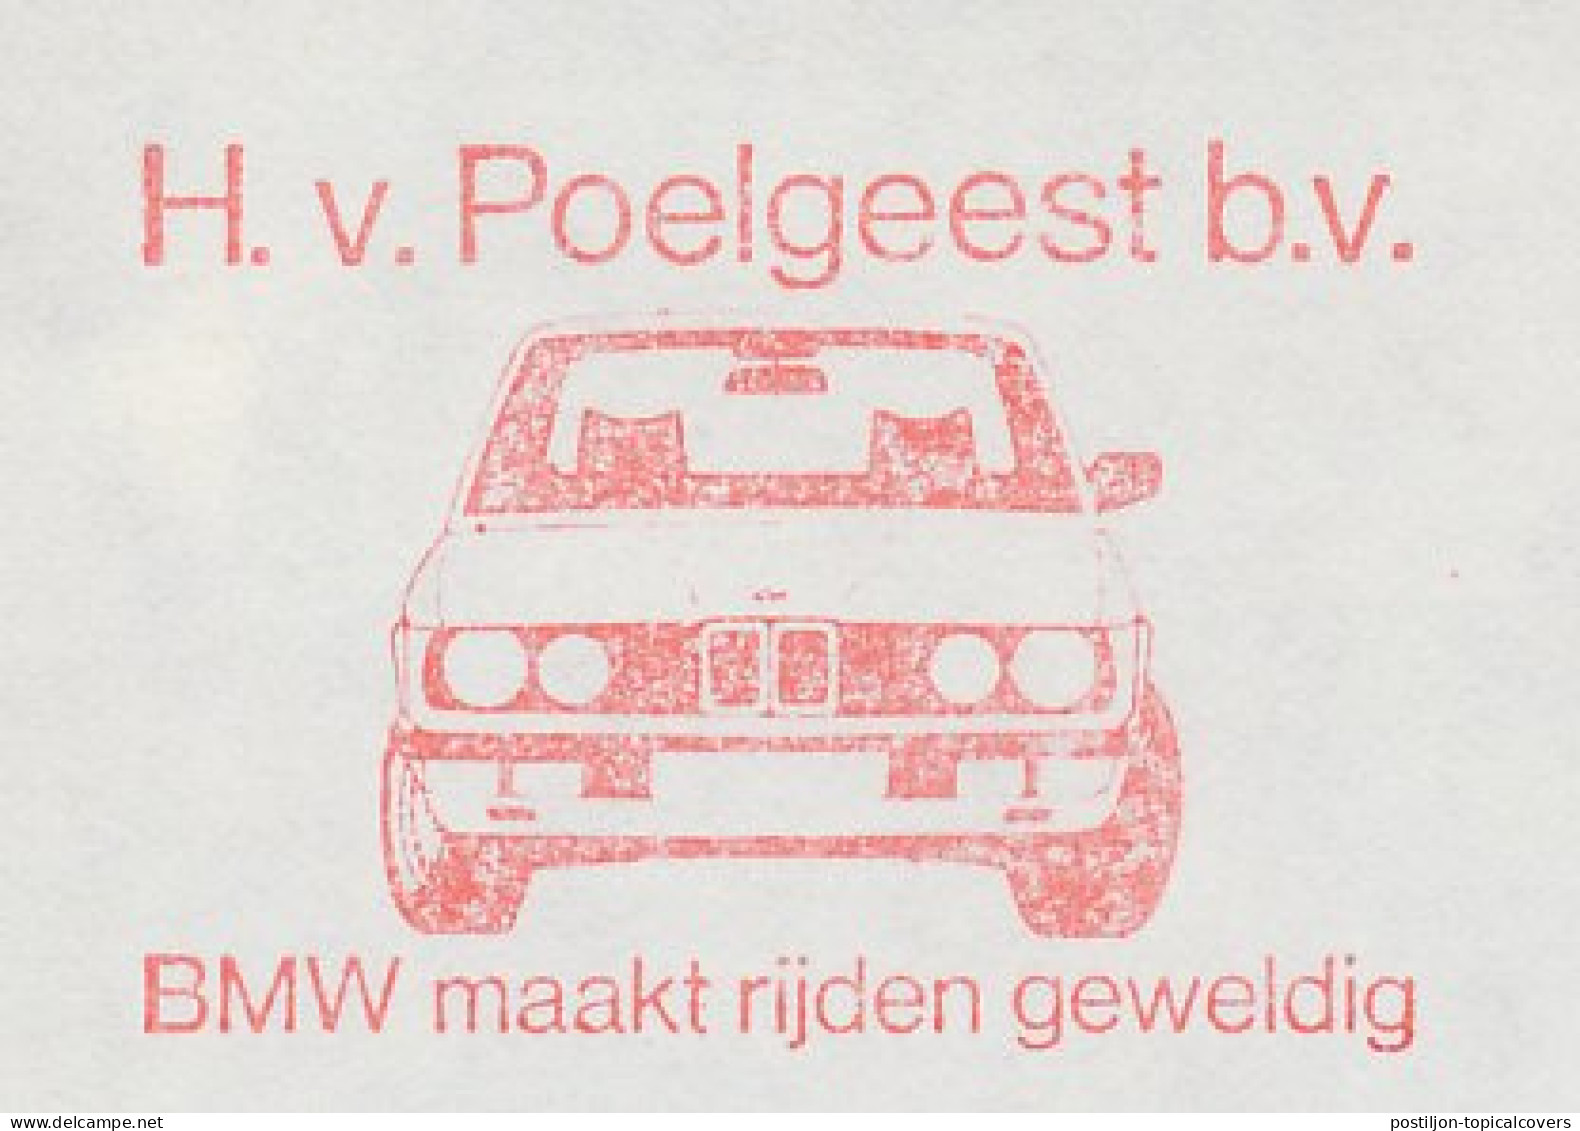 Meter Cut Netherlands 1984 Car - BMW - Cars